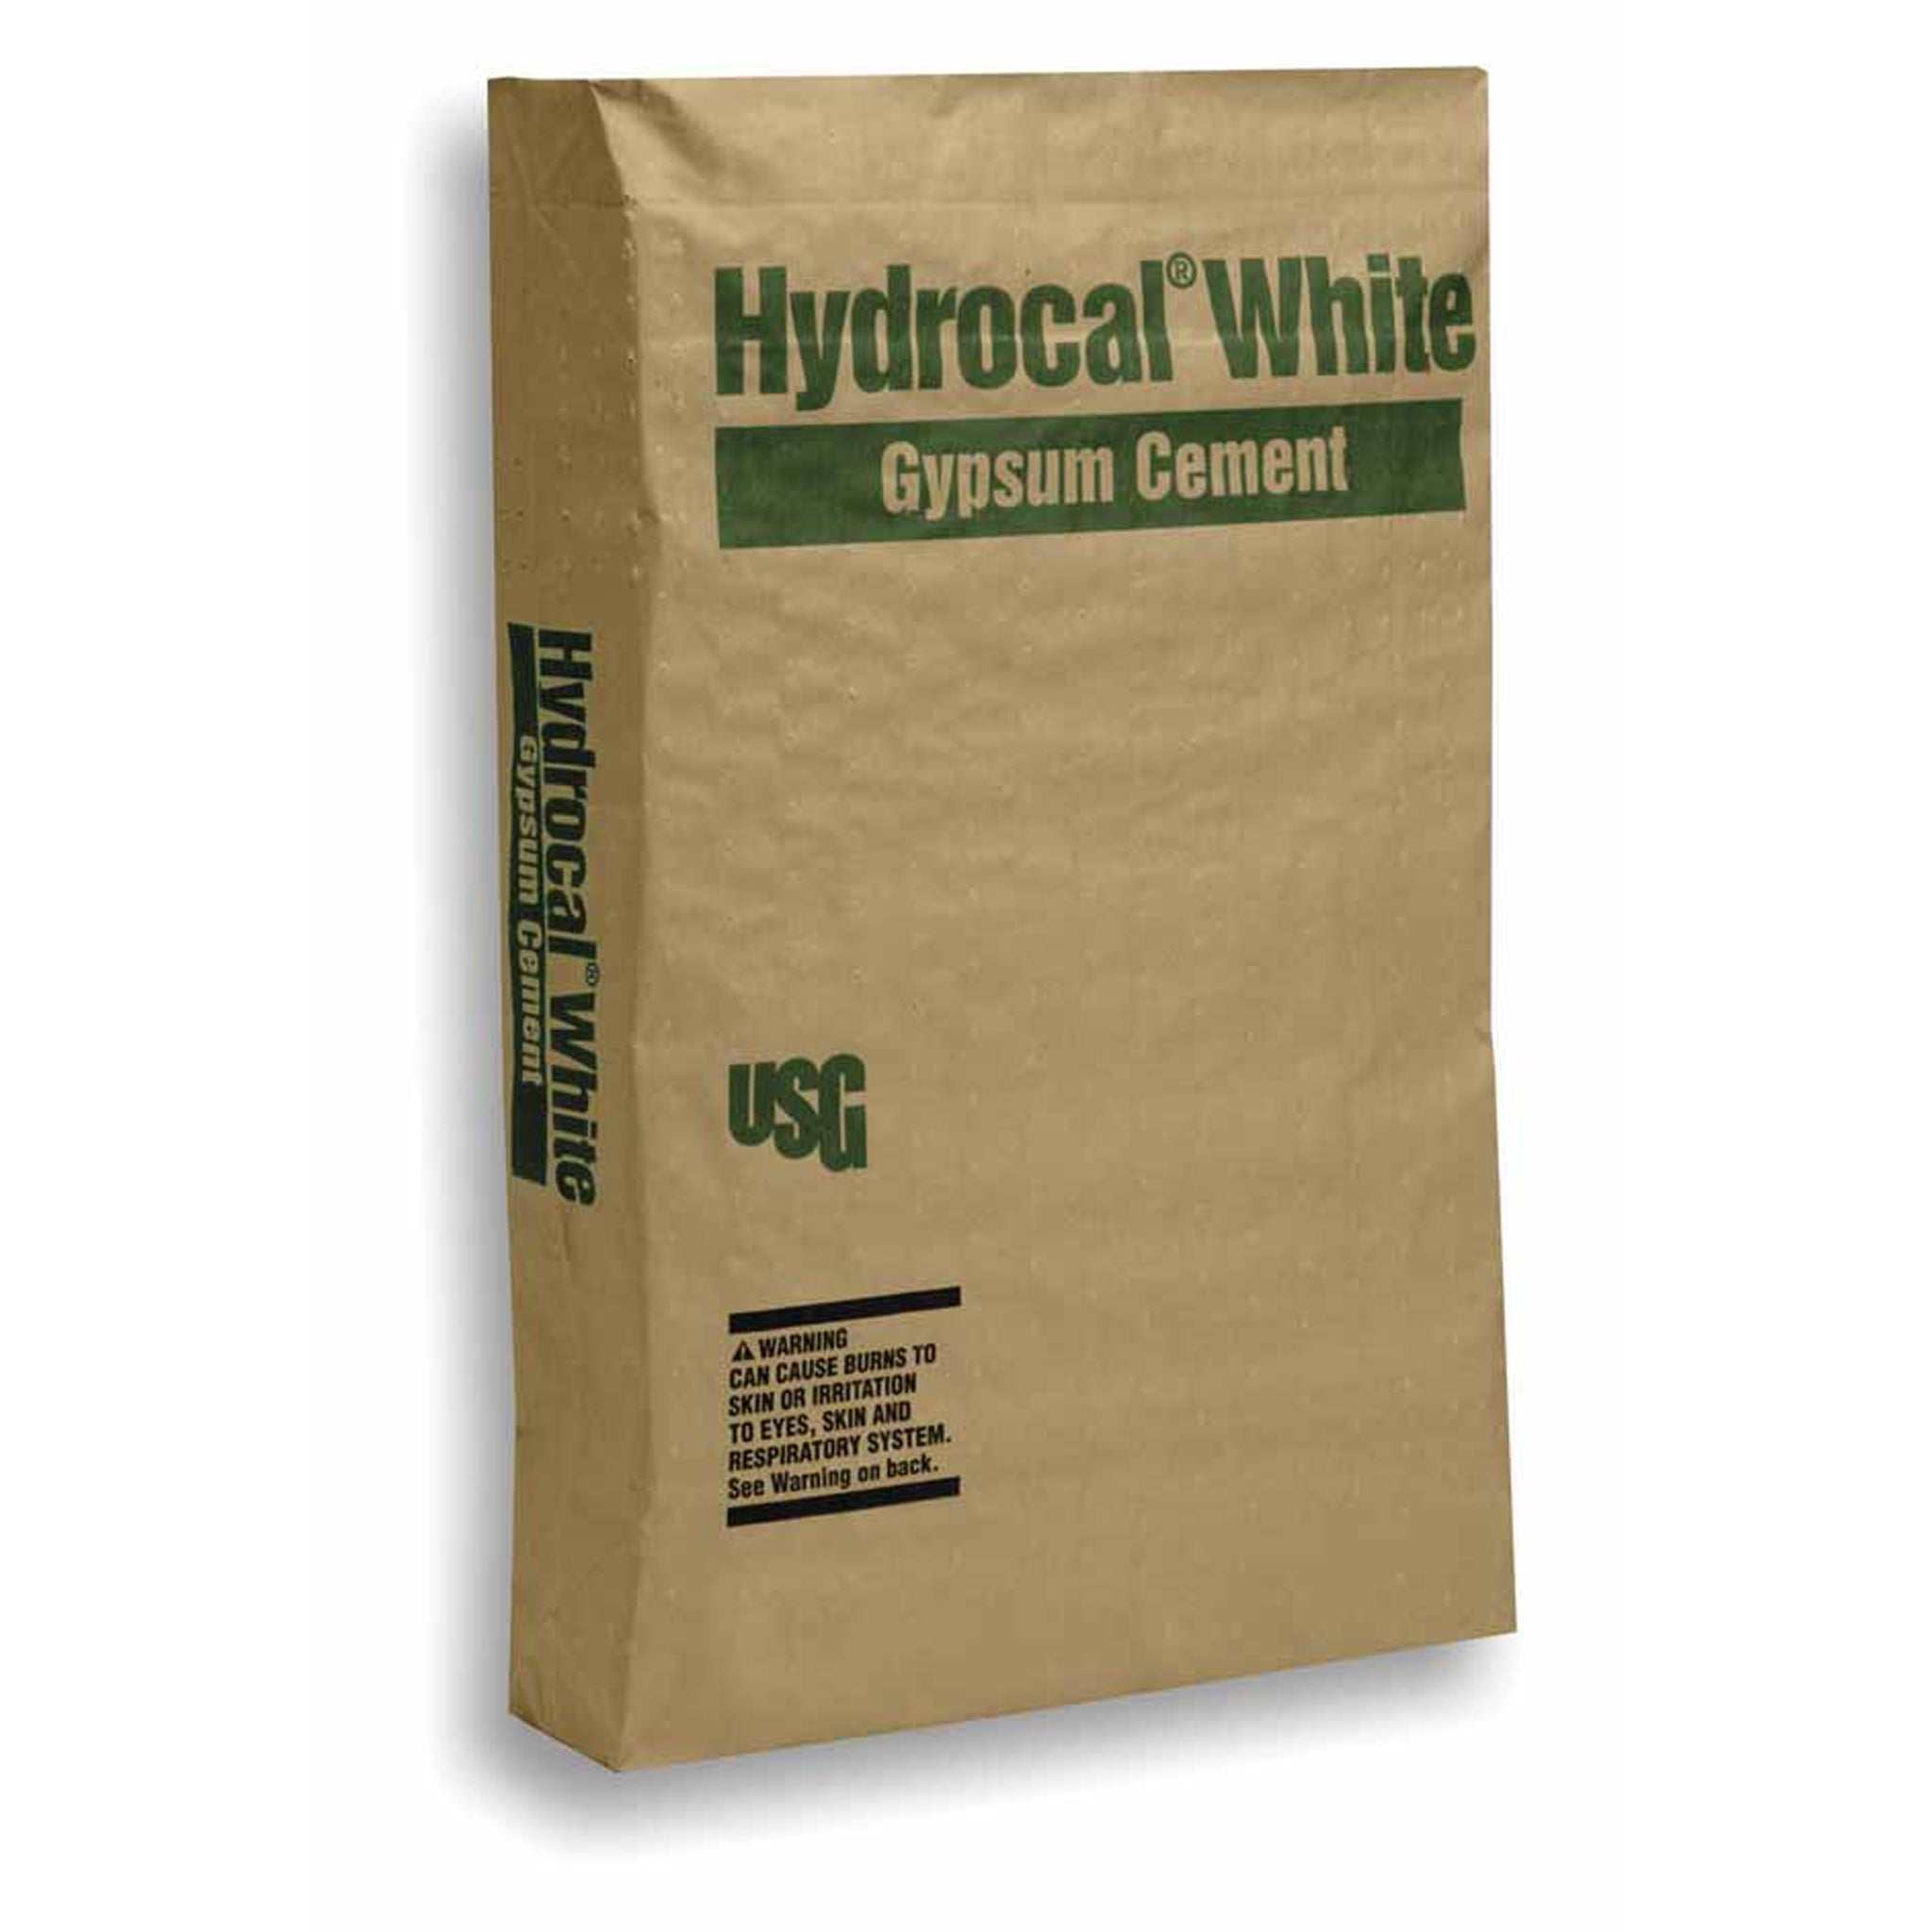 Hydrocal White